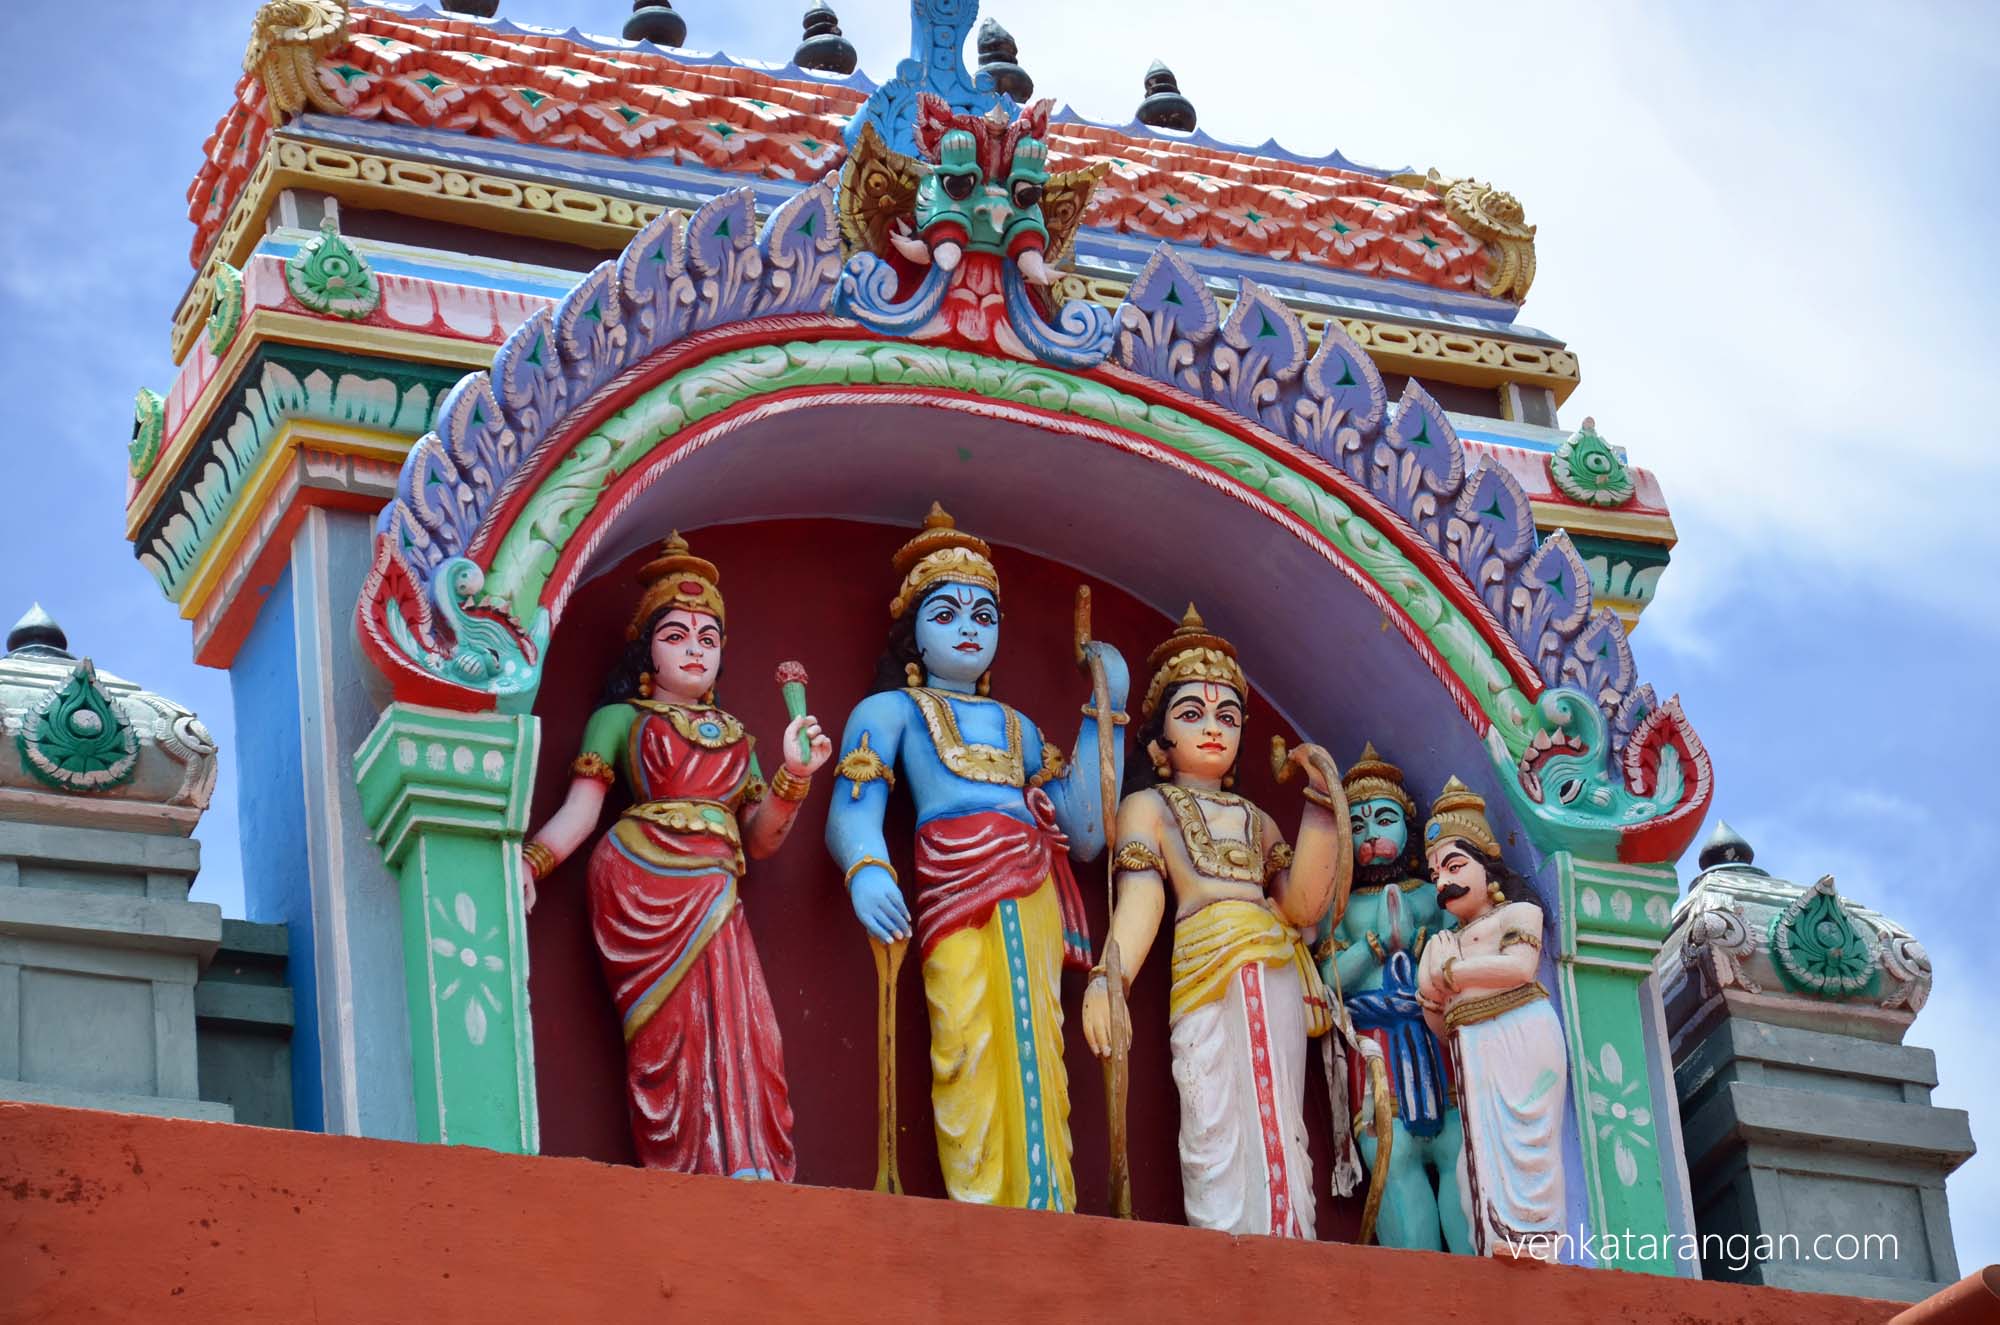 The temple tower depicting Goddess Seetha, God Rama and his brother Lakshmana along with Hanuman and Vibhheeshunar